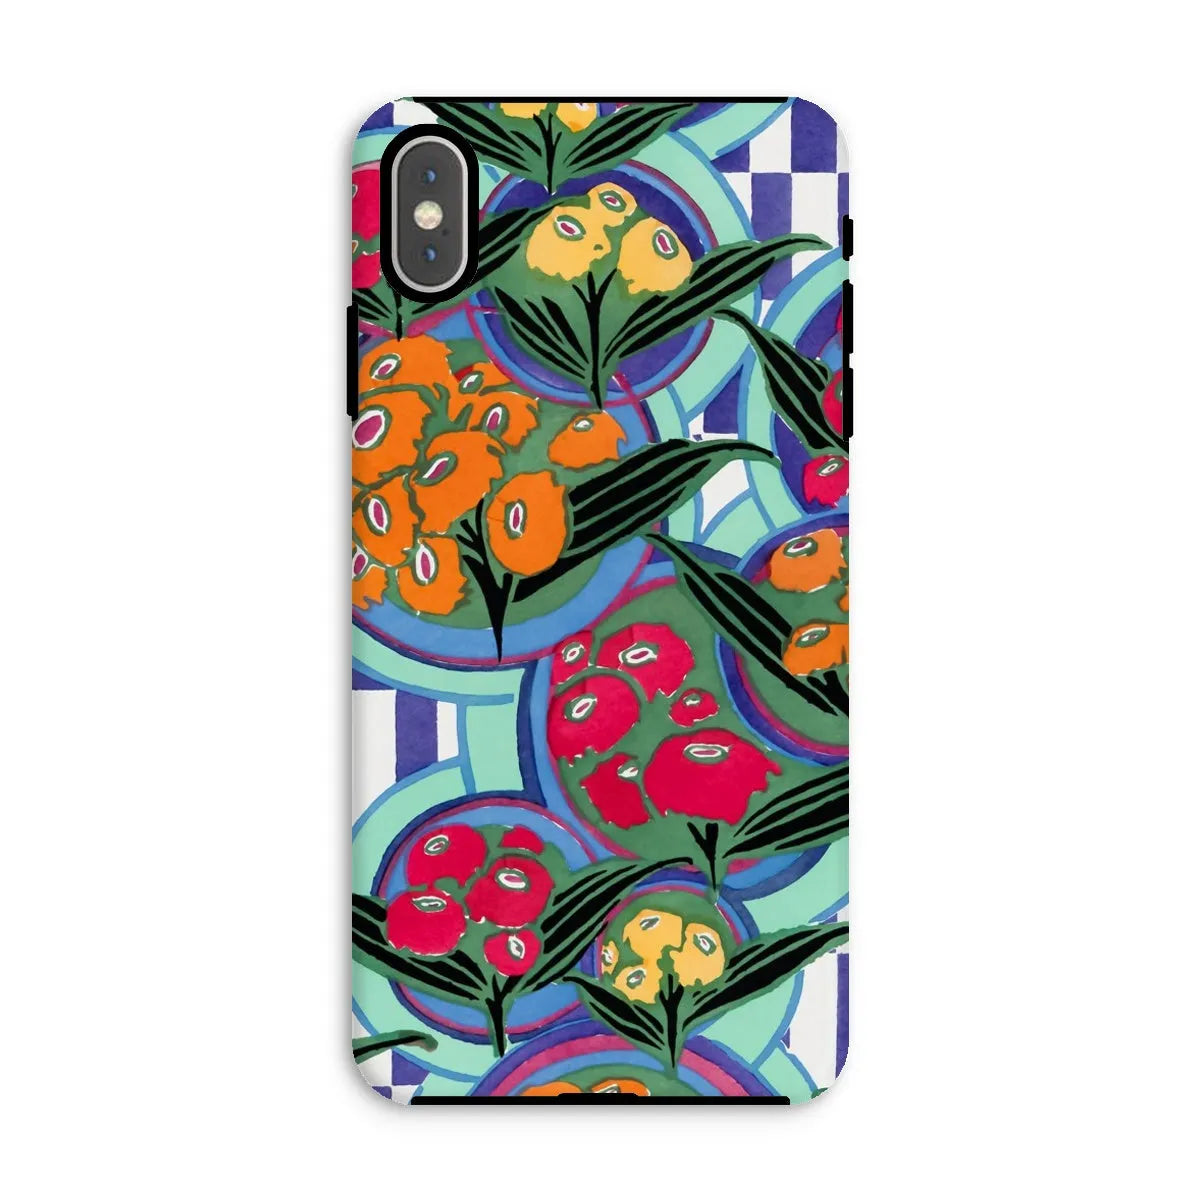 Vibrant Floral Aesthetic Art Phone Case - E.a. Séguy - Iphone Xs Max / Matte - Mobile Phone Cases - Aesthetic Art